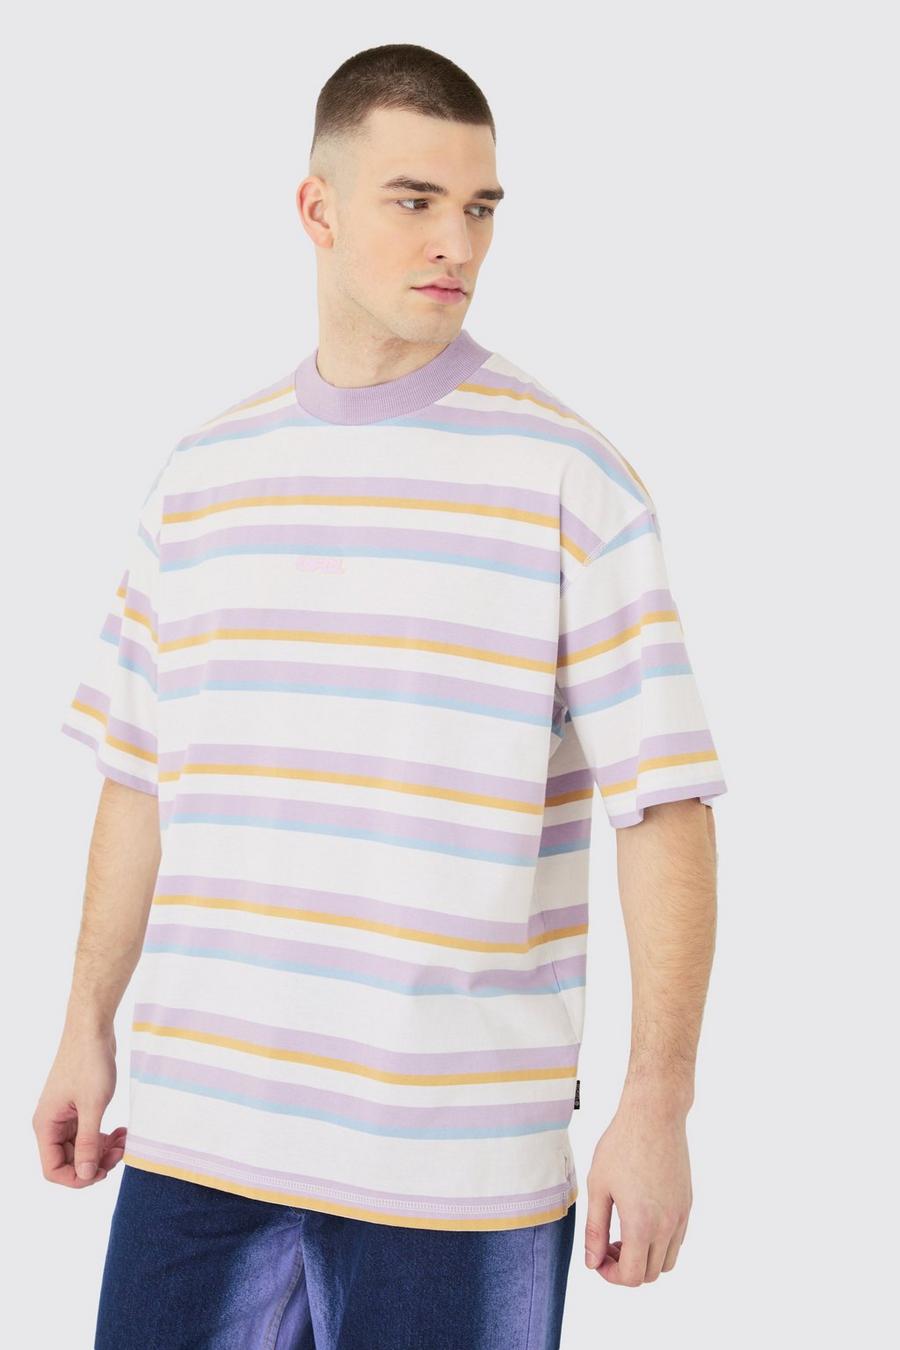 Camiseta Tall oversize Ofcl de rayas gruesas, Lilac